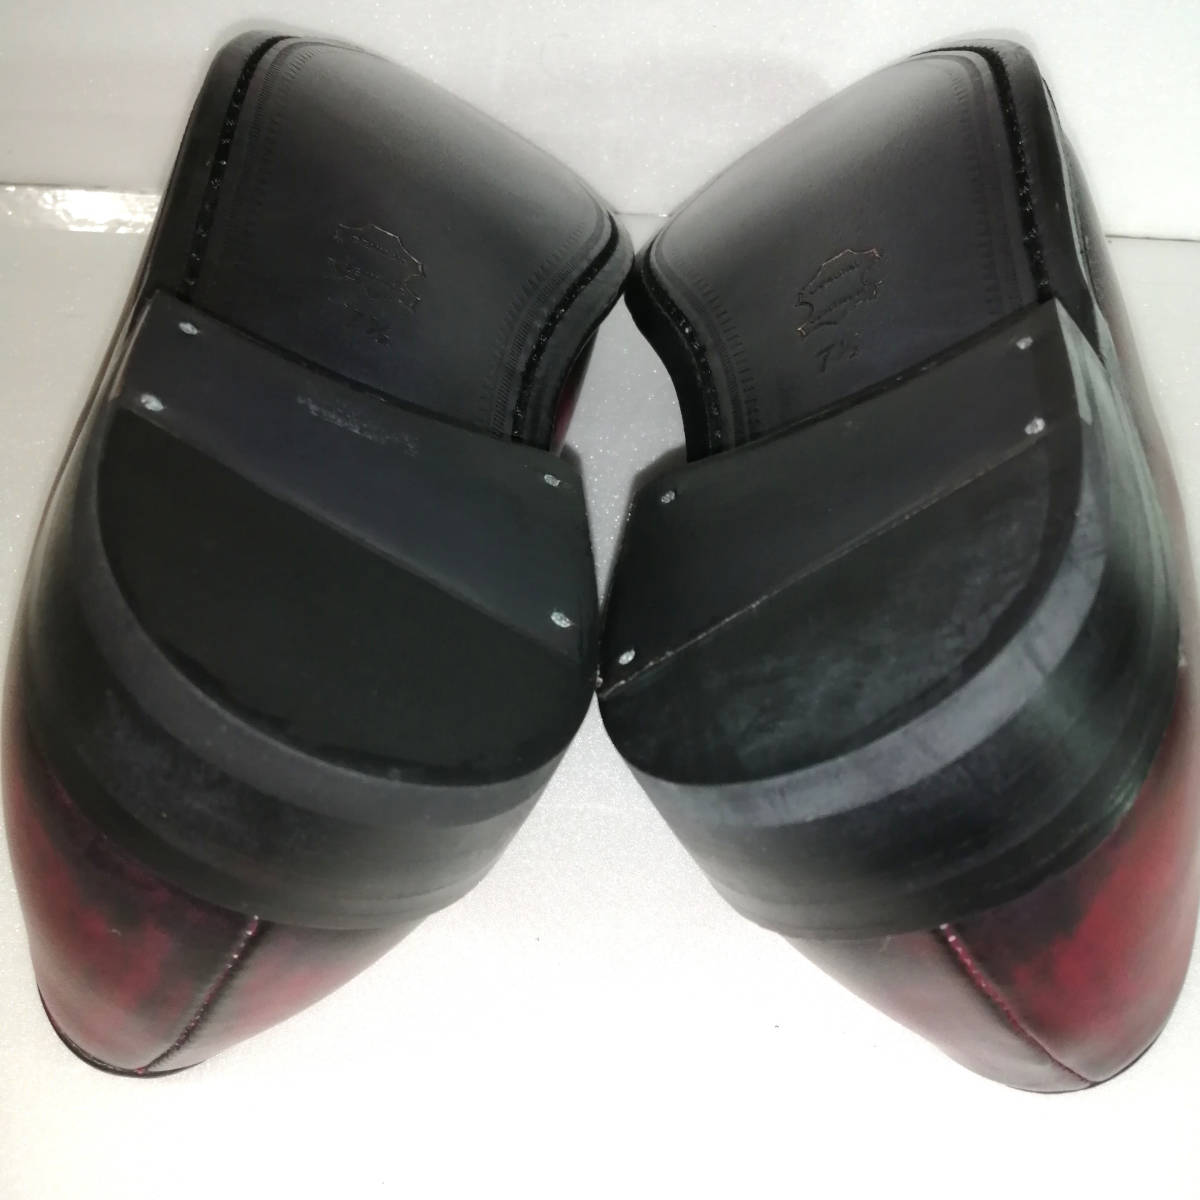  leather shoes slip-on shoes bi spoke custom-made goods? original leather 